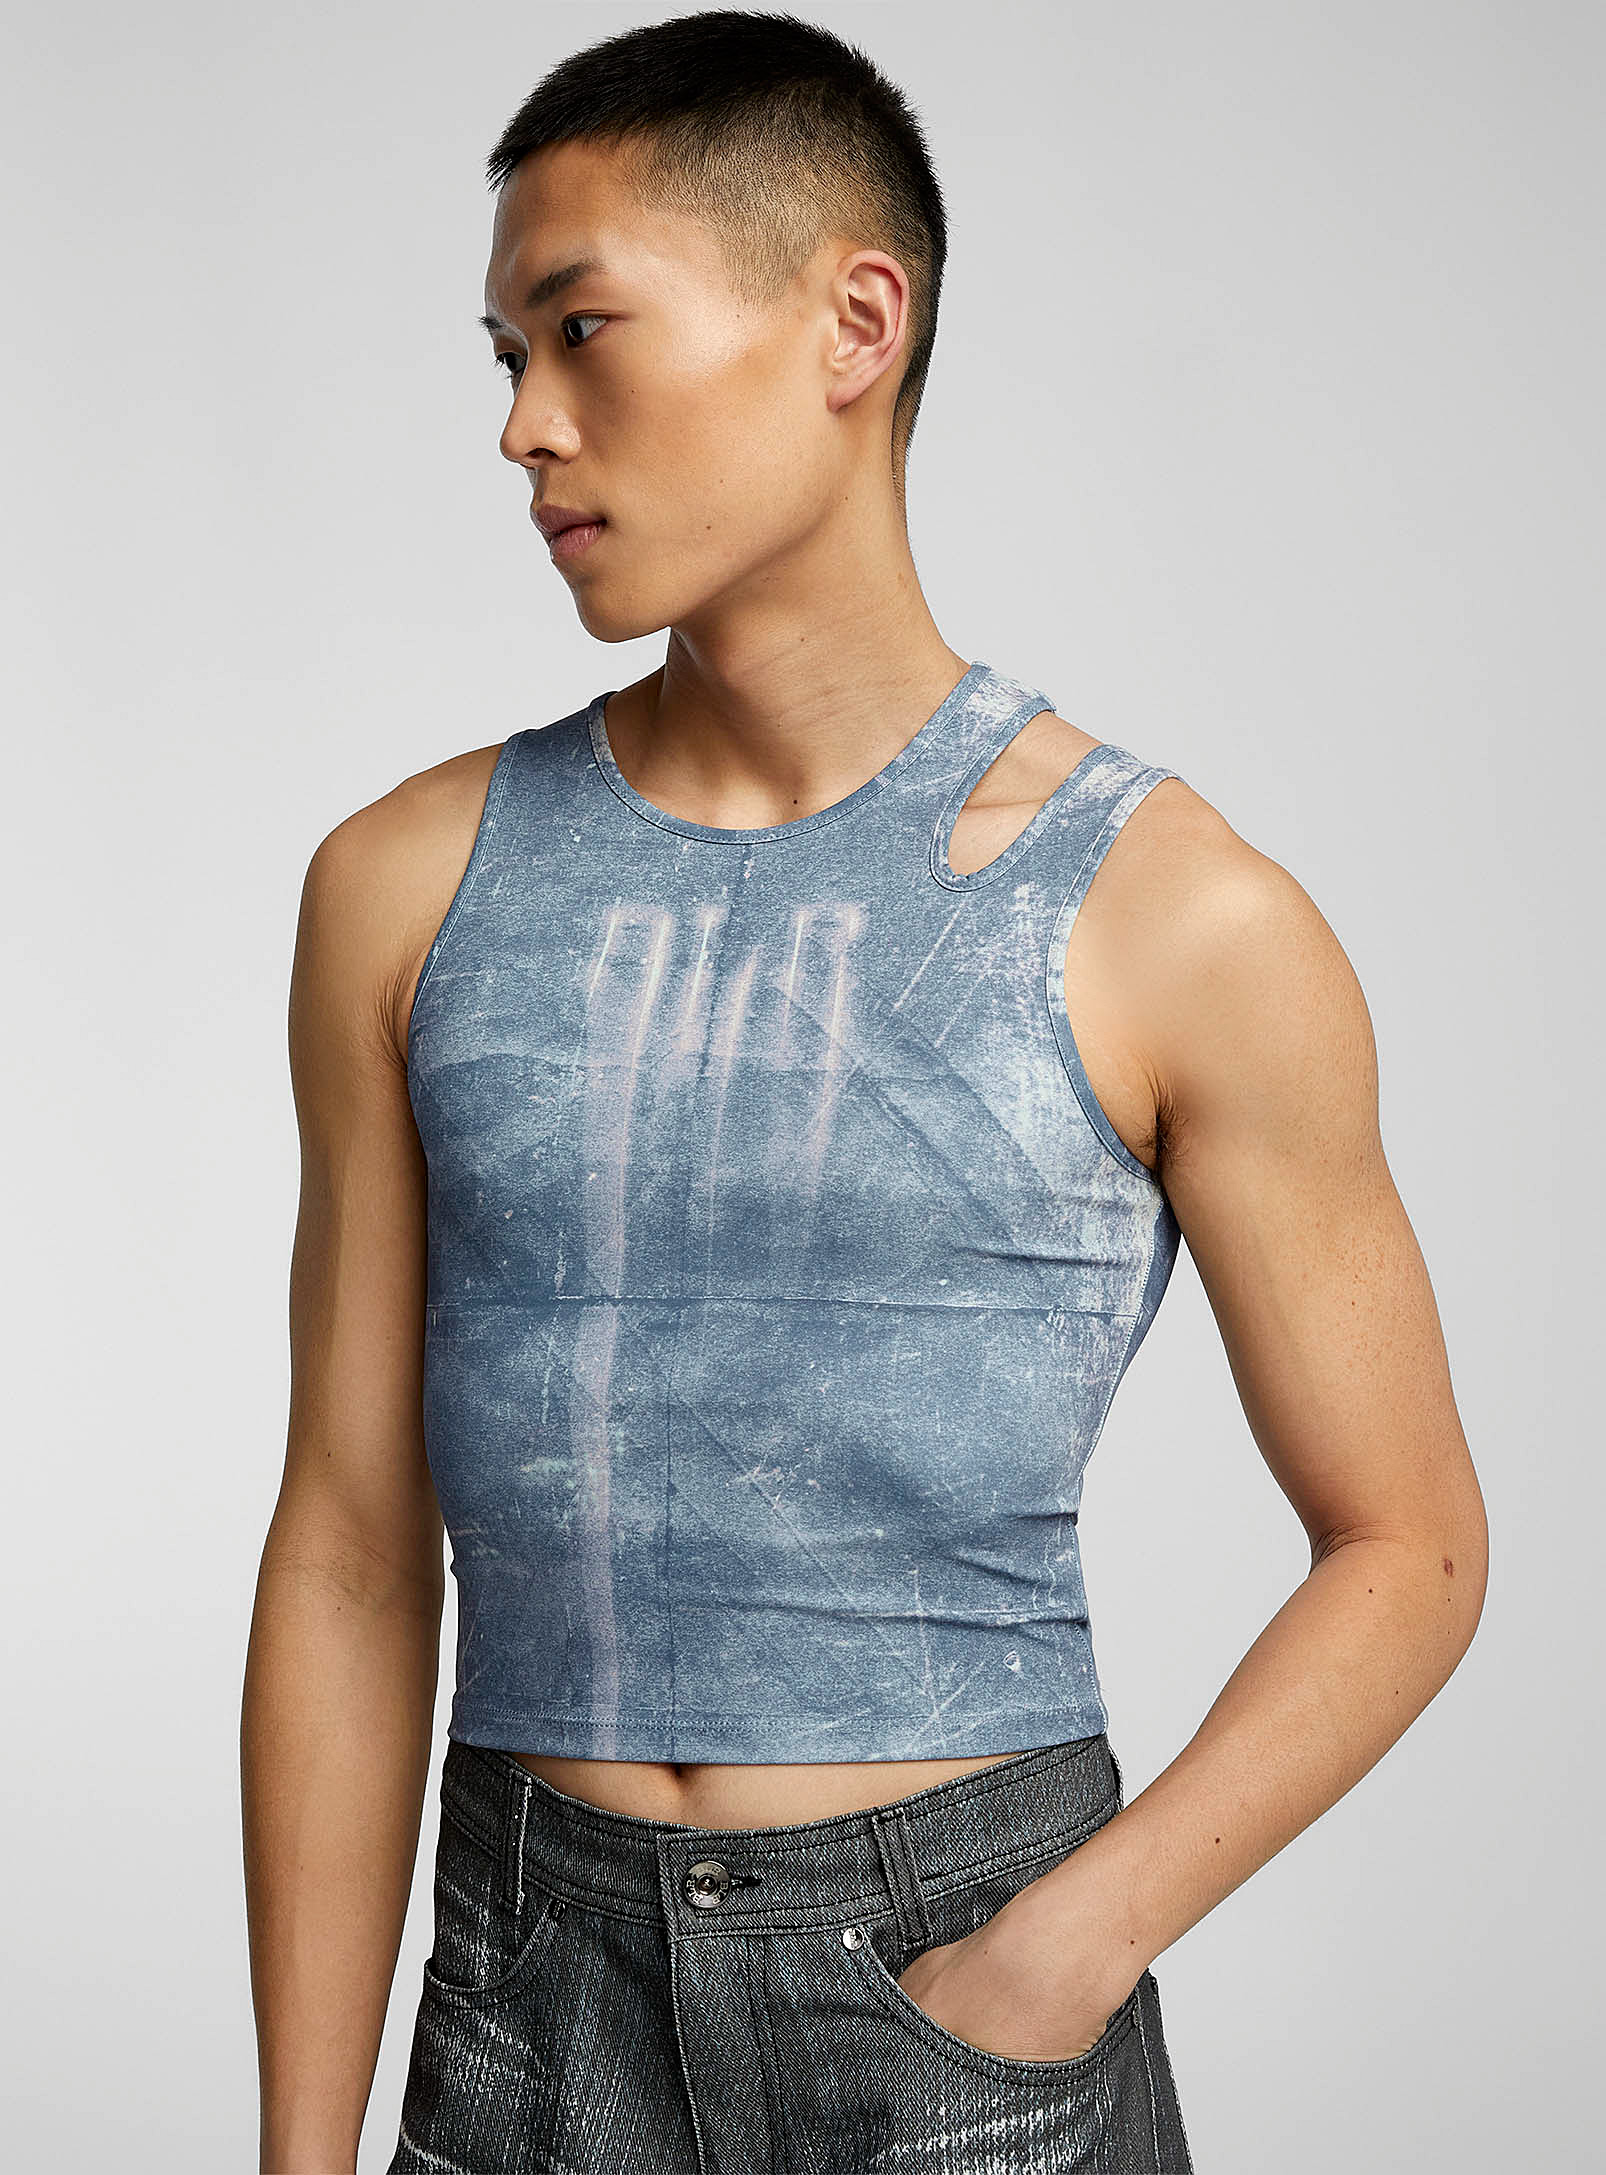 BLR - Men's Cutout shoulder fitted vest